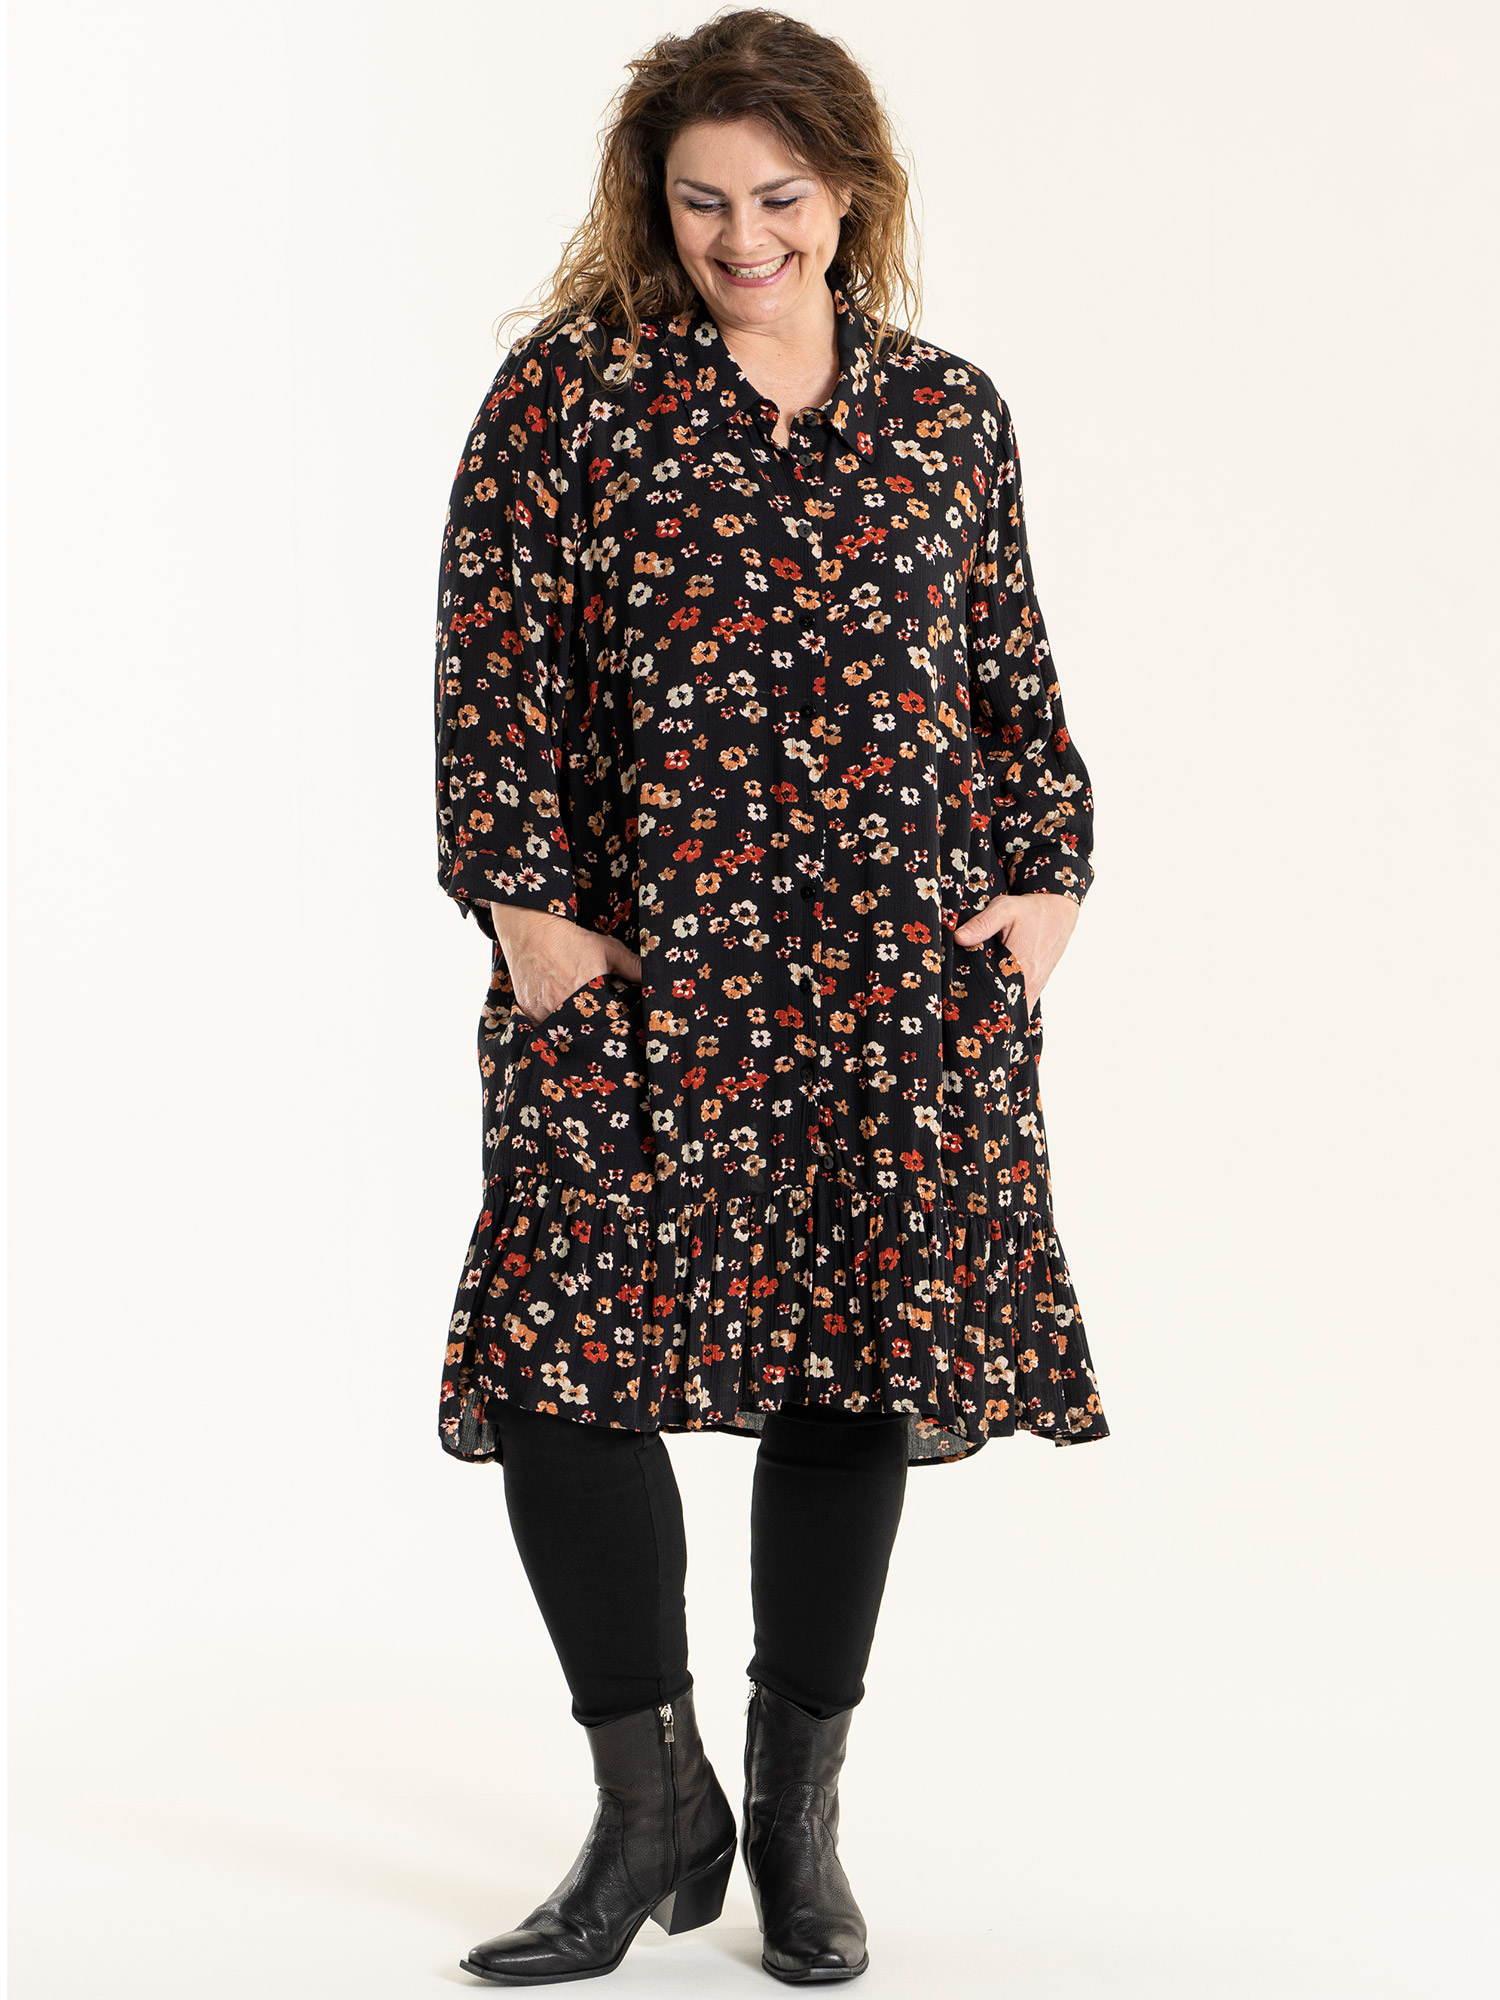 EDITH - Sort skjorte tunika i crepet viskose med blomster print fra Gozzip